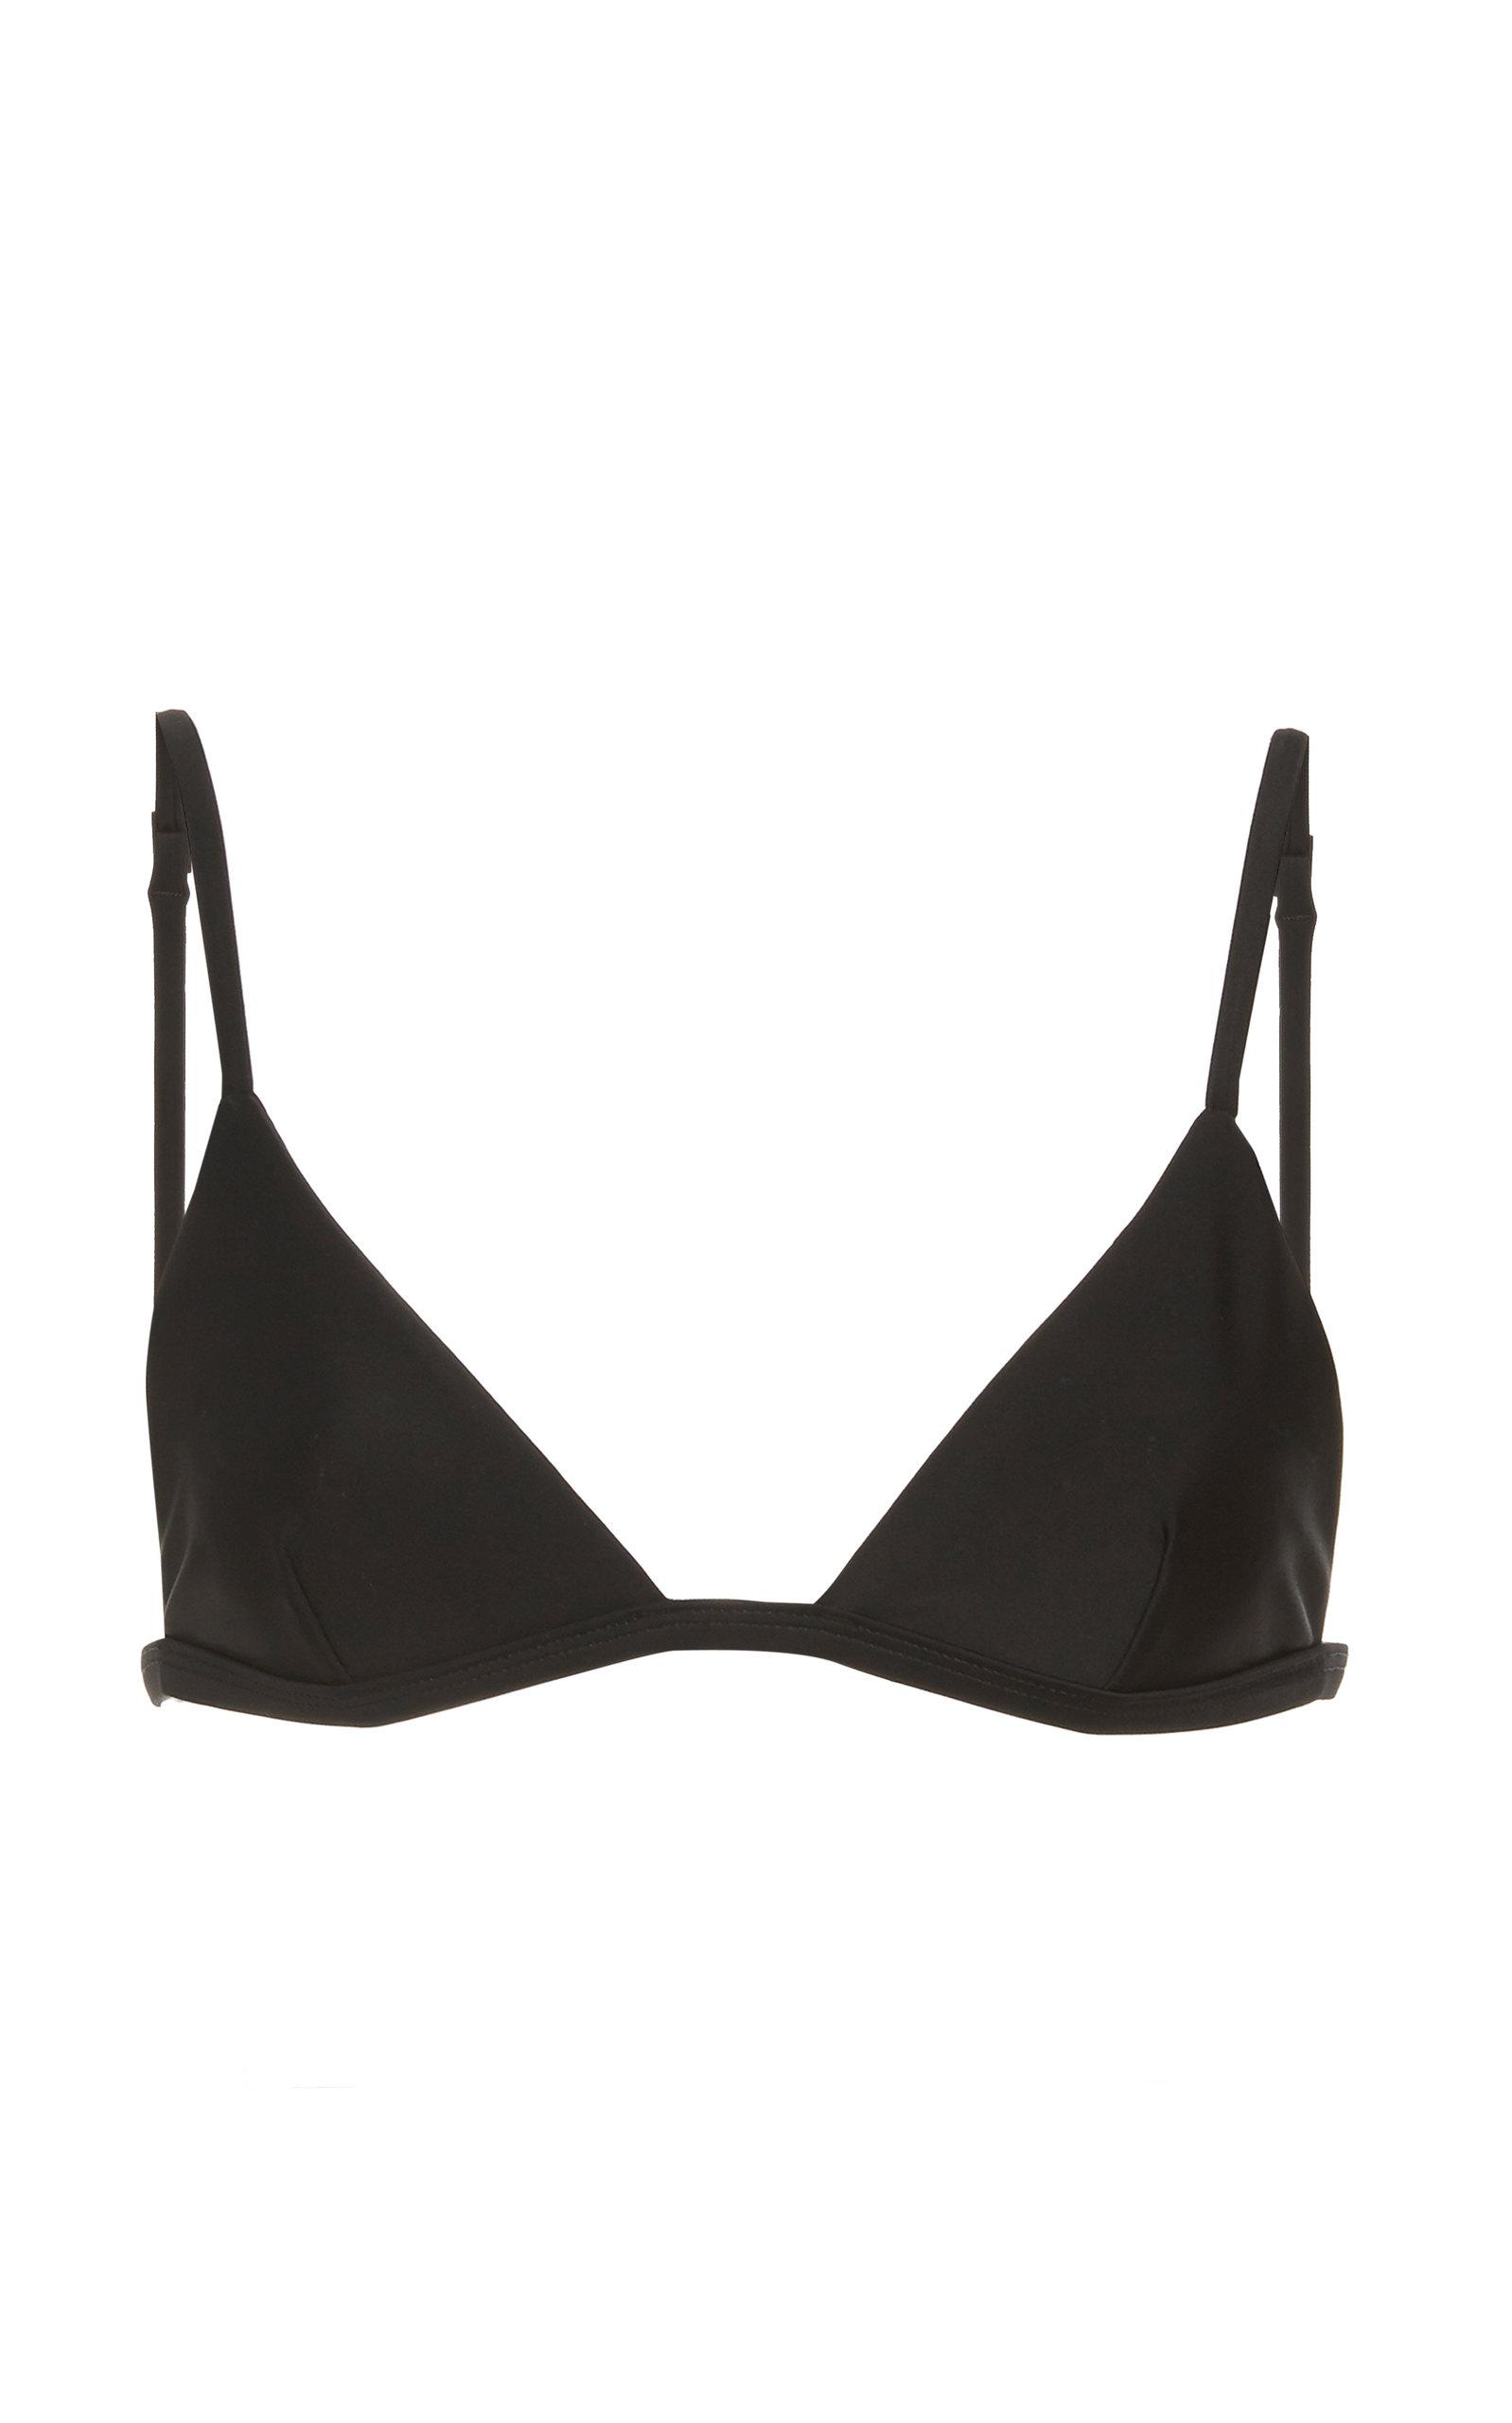 Matteau Synthetic Petite Triangle Bikini Top in Black - Lyst